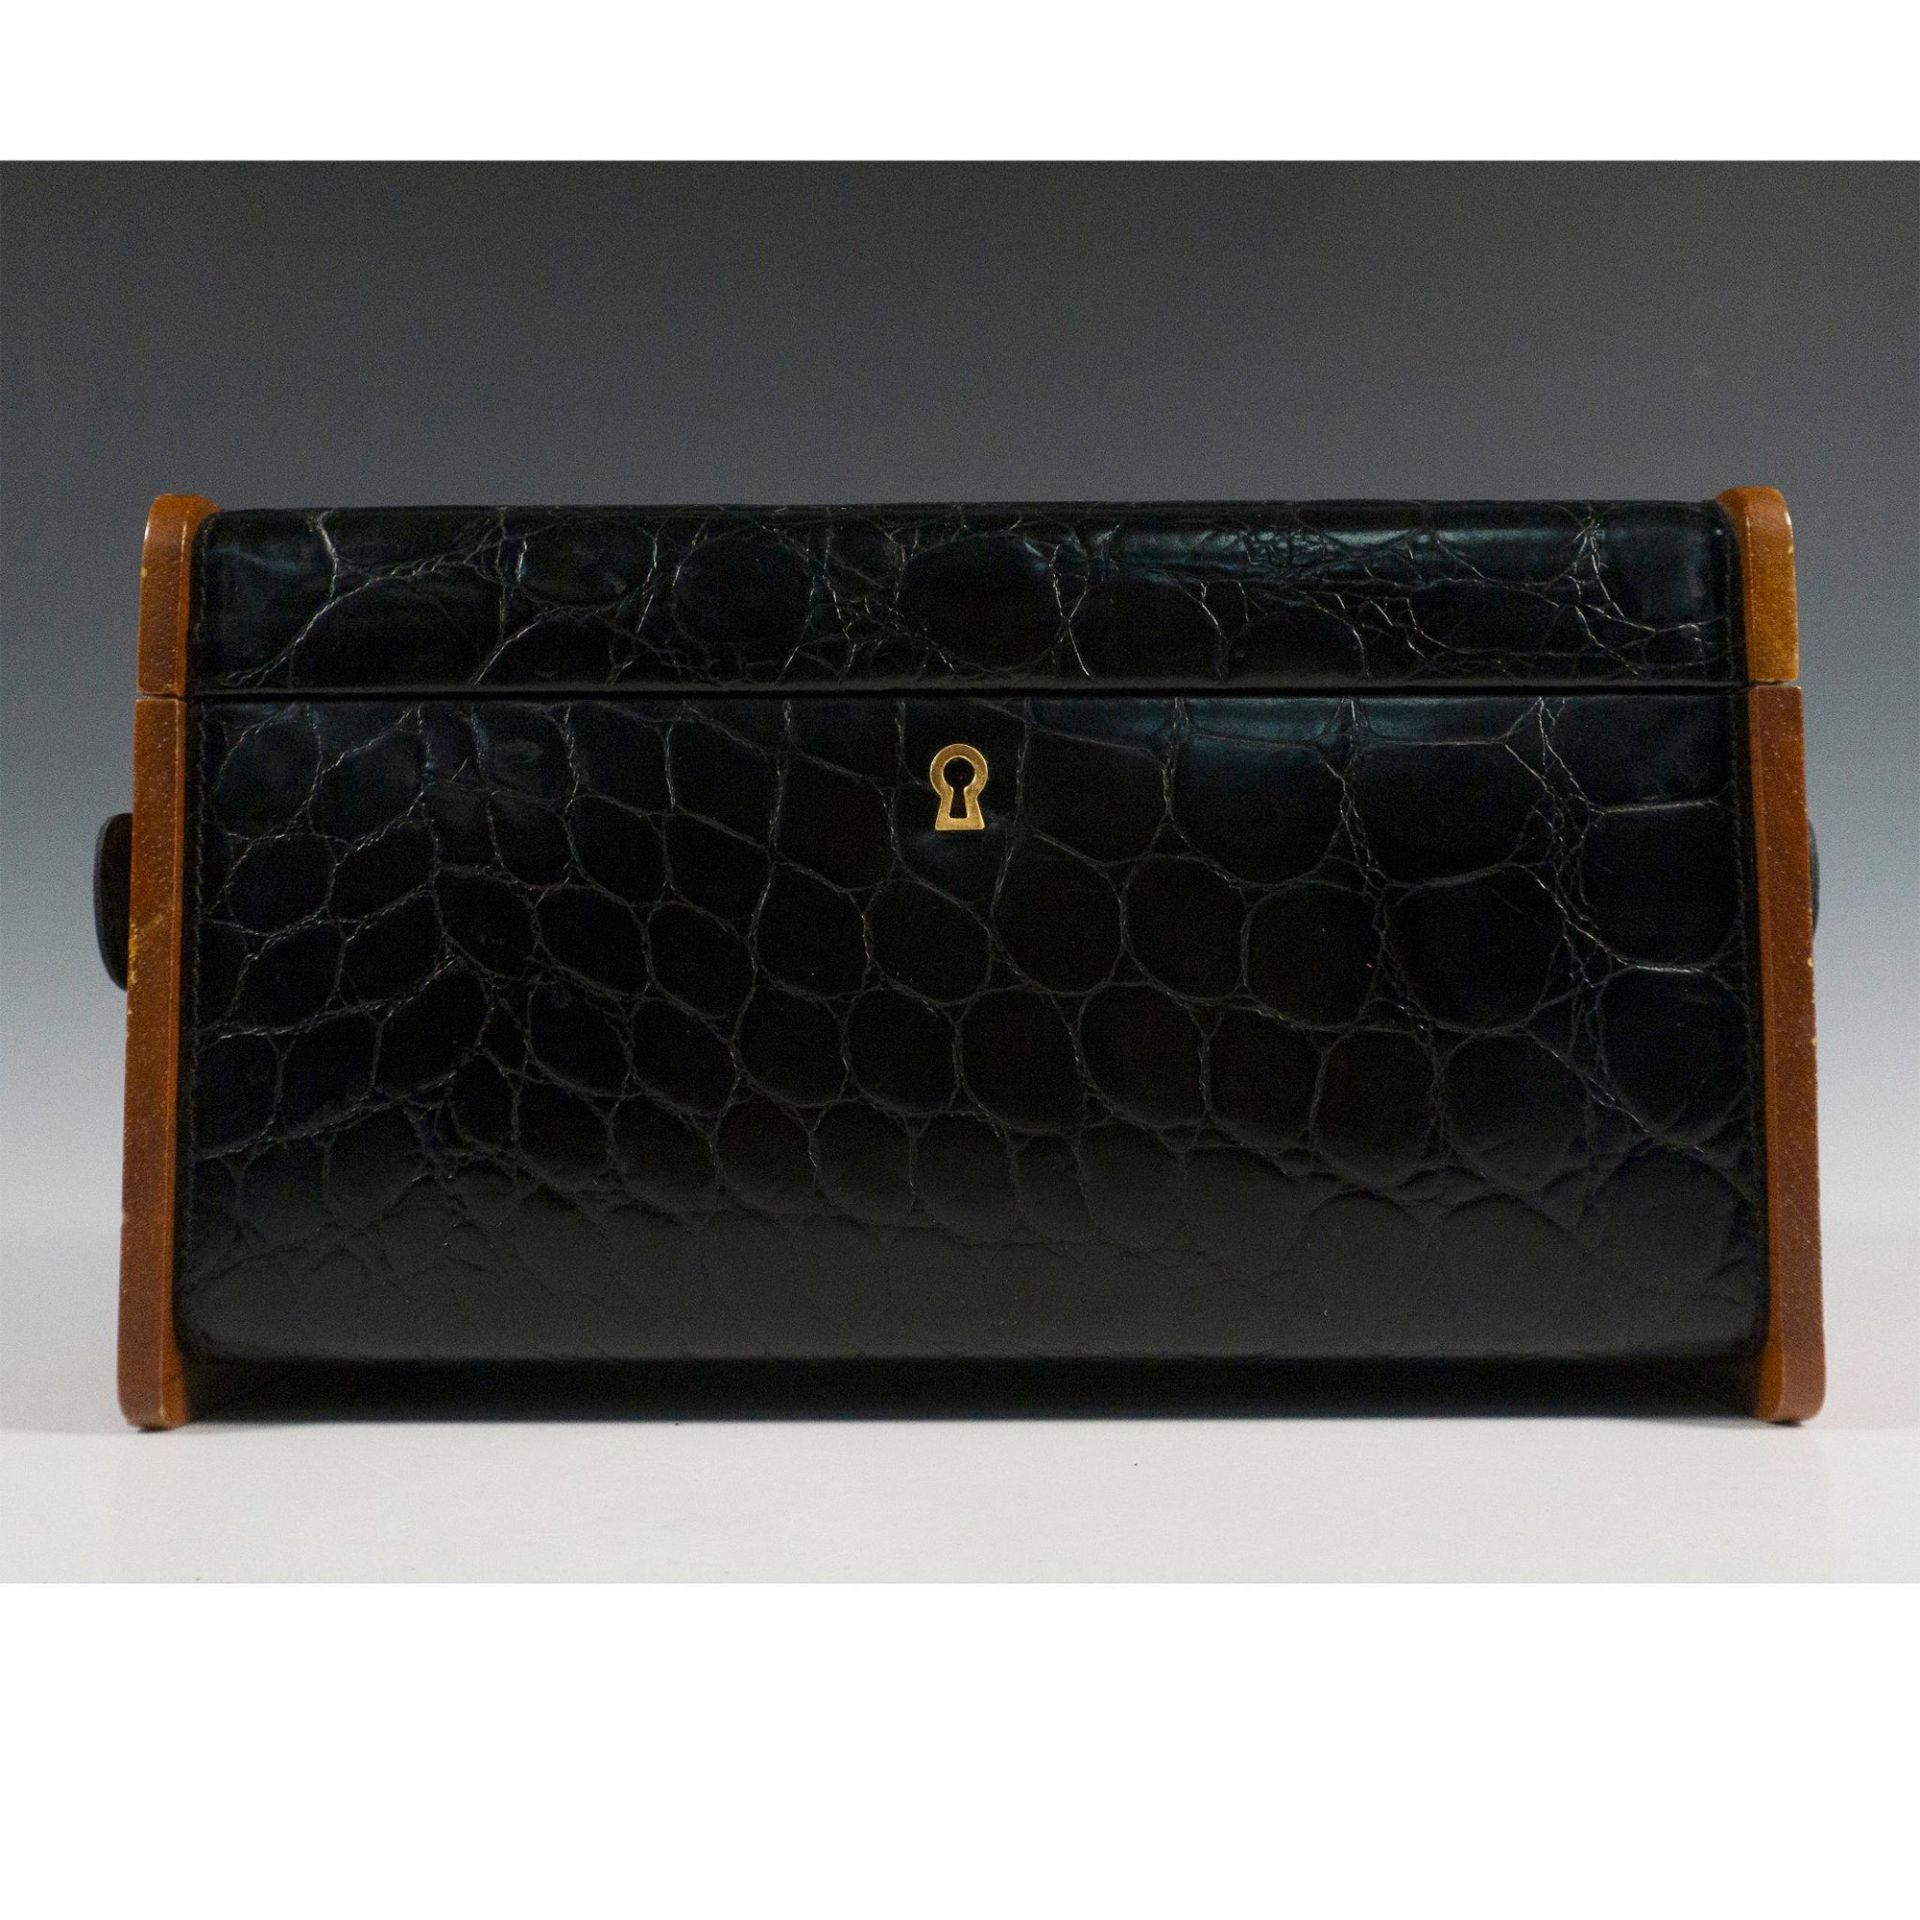 Spanish Black Leather and Wood Cigar Humidor Box - Image 2 of 6